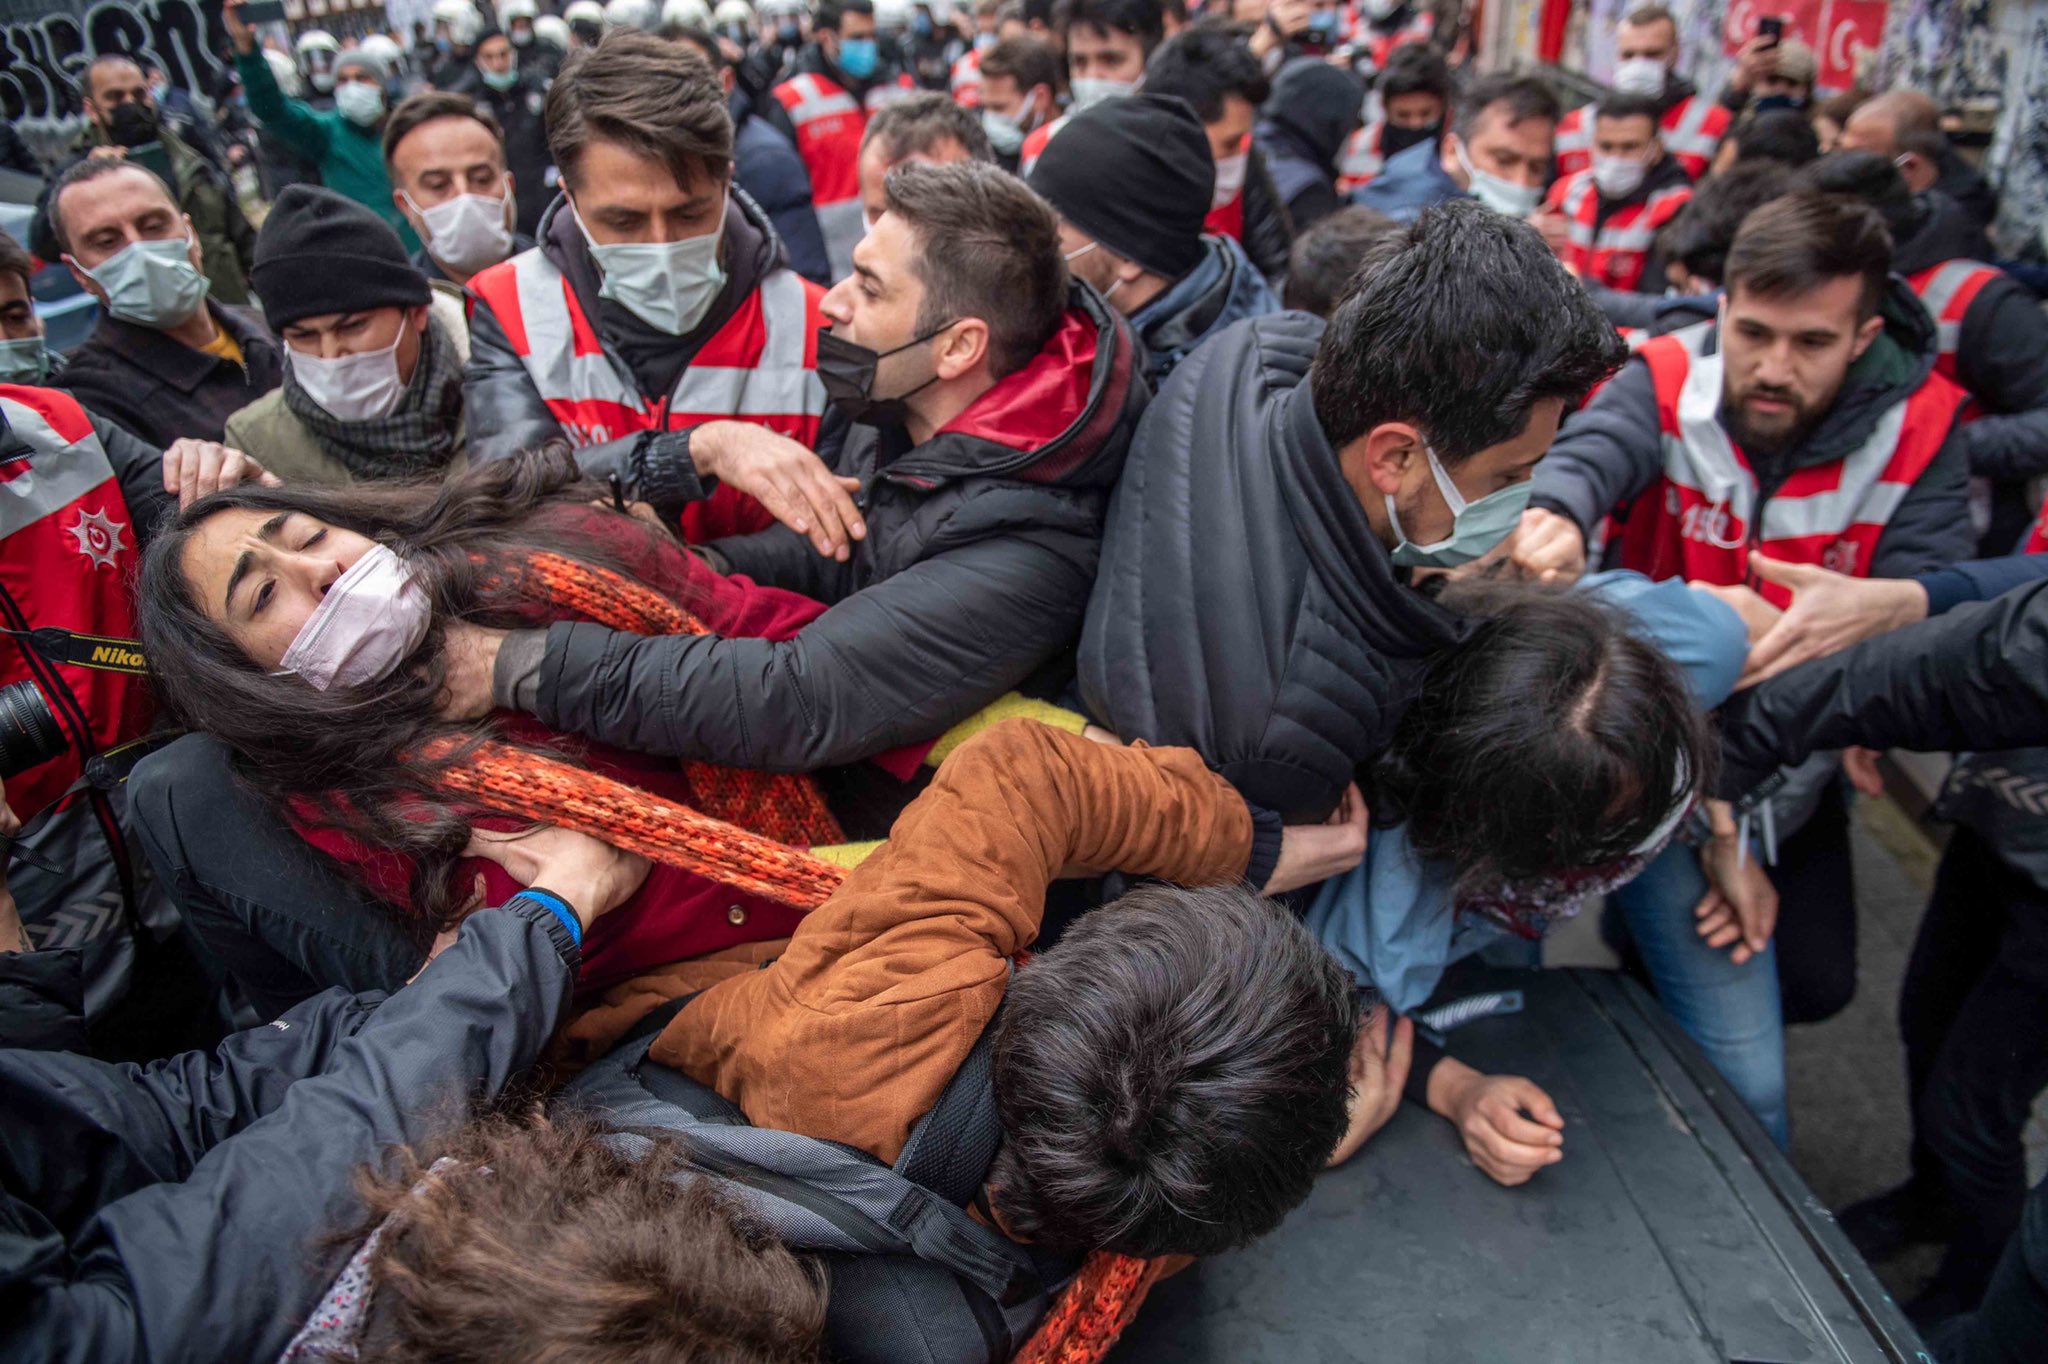 Police beat, arrest Boğaziçi University students demanding release of jailed friends 1